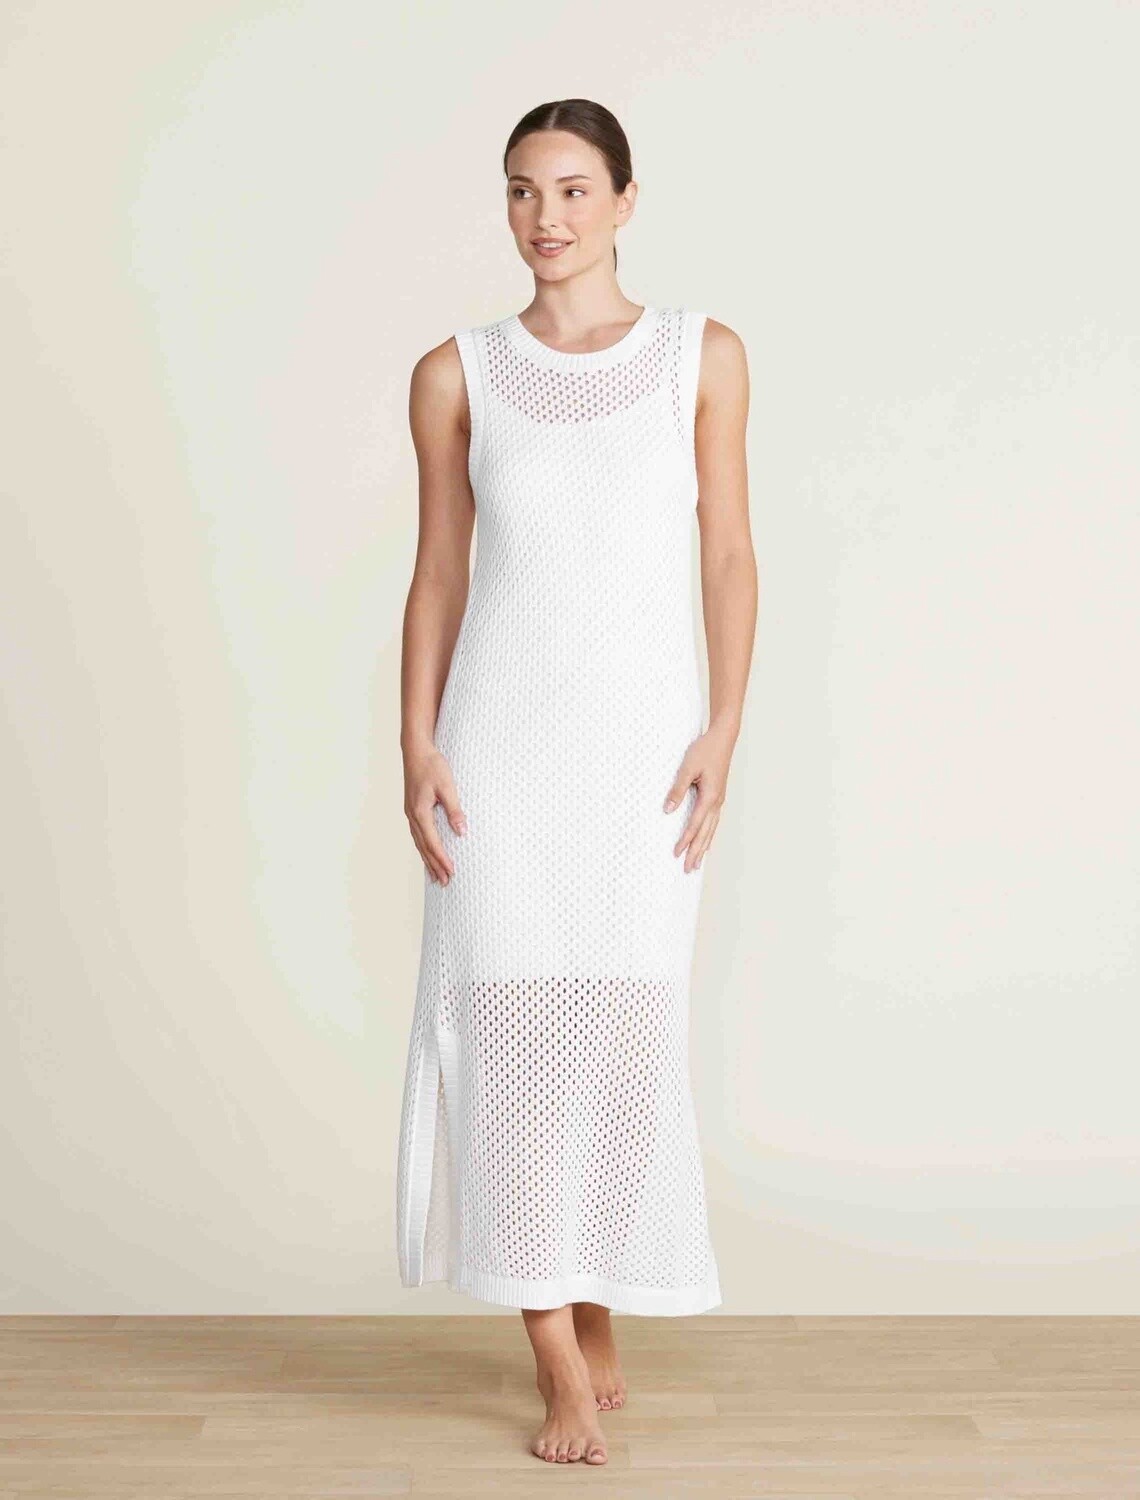 Sunbleached Beach Dress, Colour: Pearl, Size: X-Small